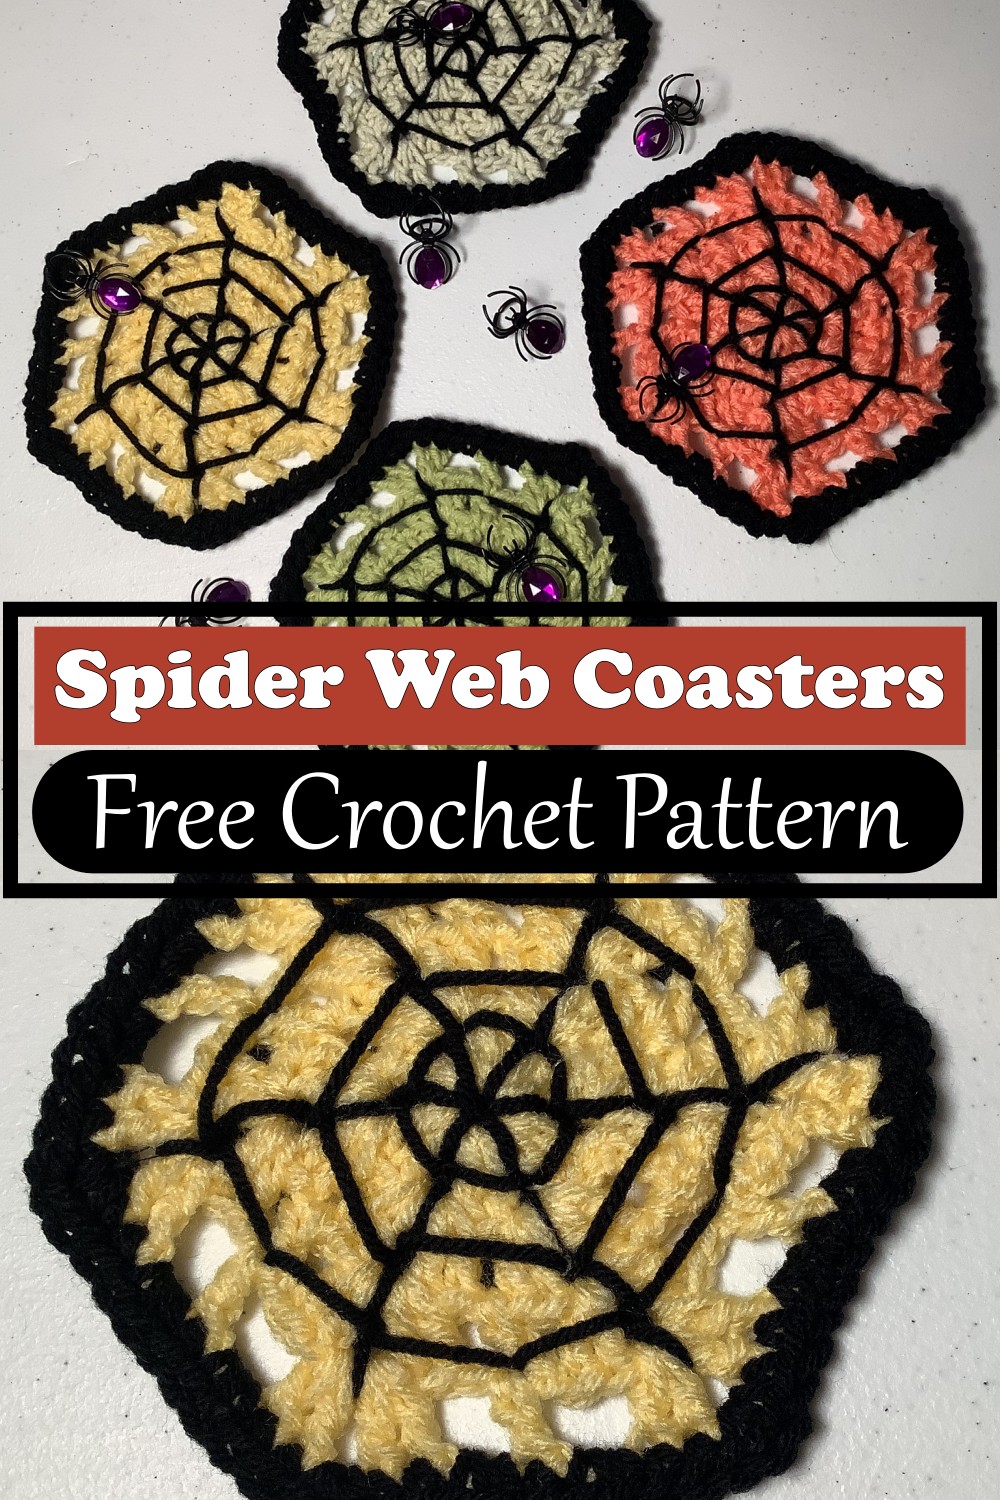 Spider Web Coasters